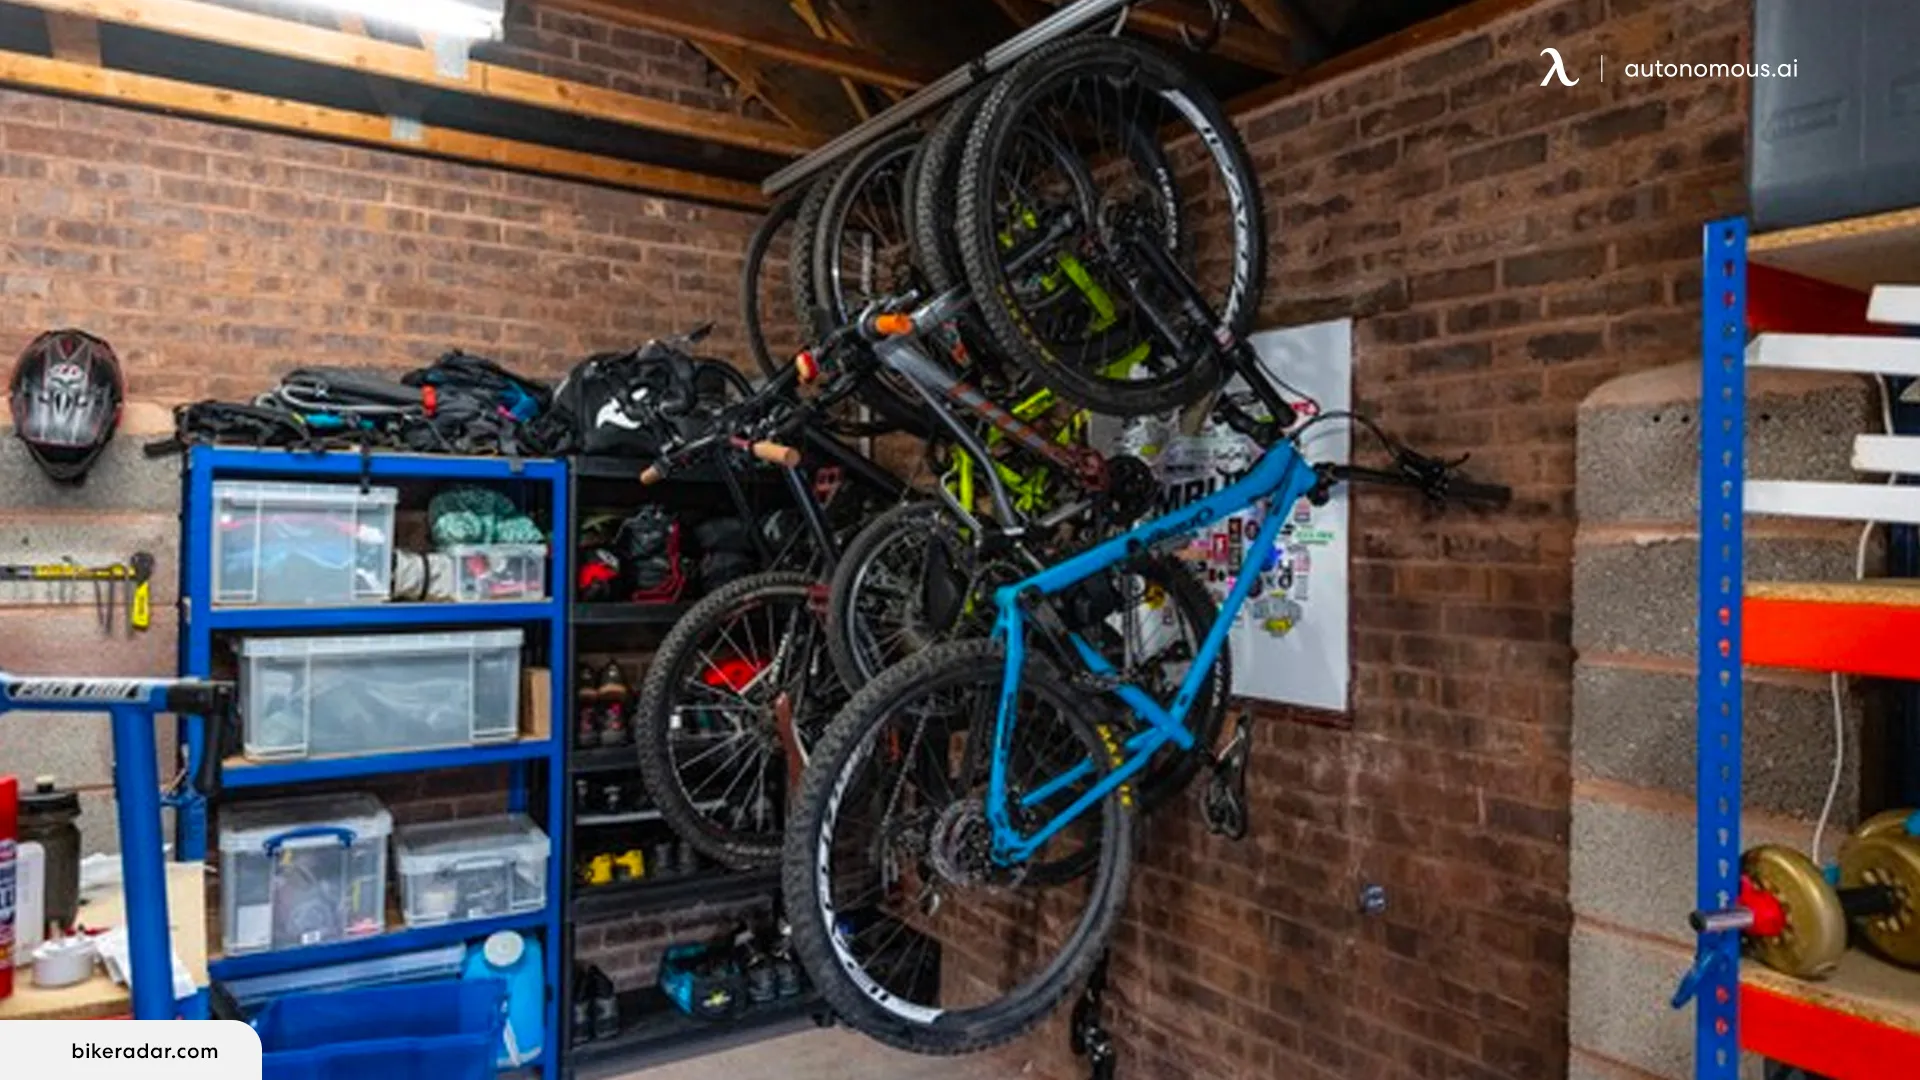 Bike Storage Solutions Inside a Shed